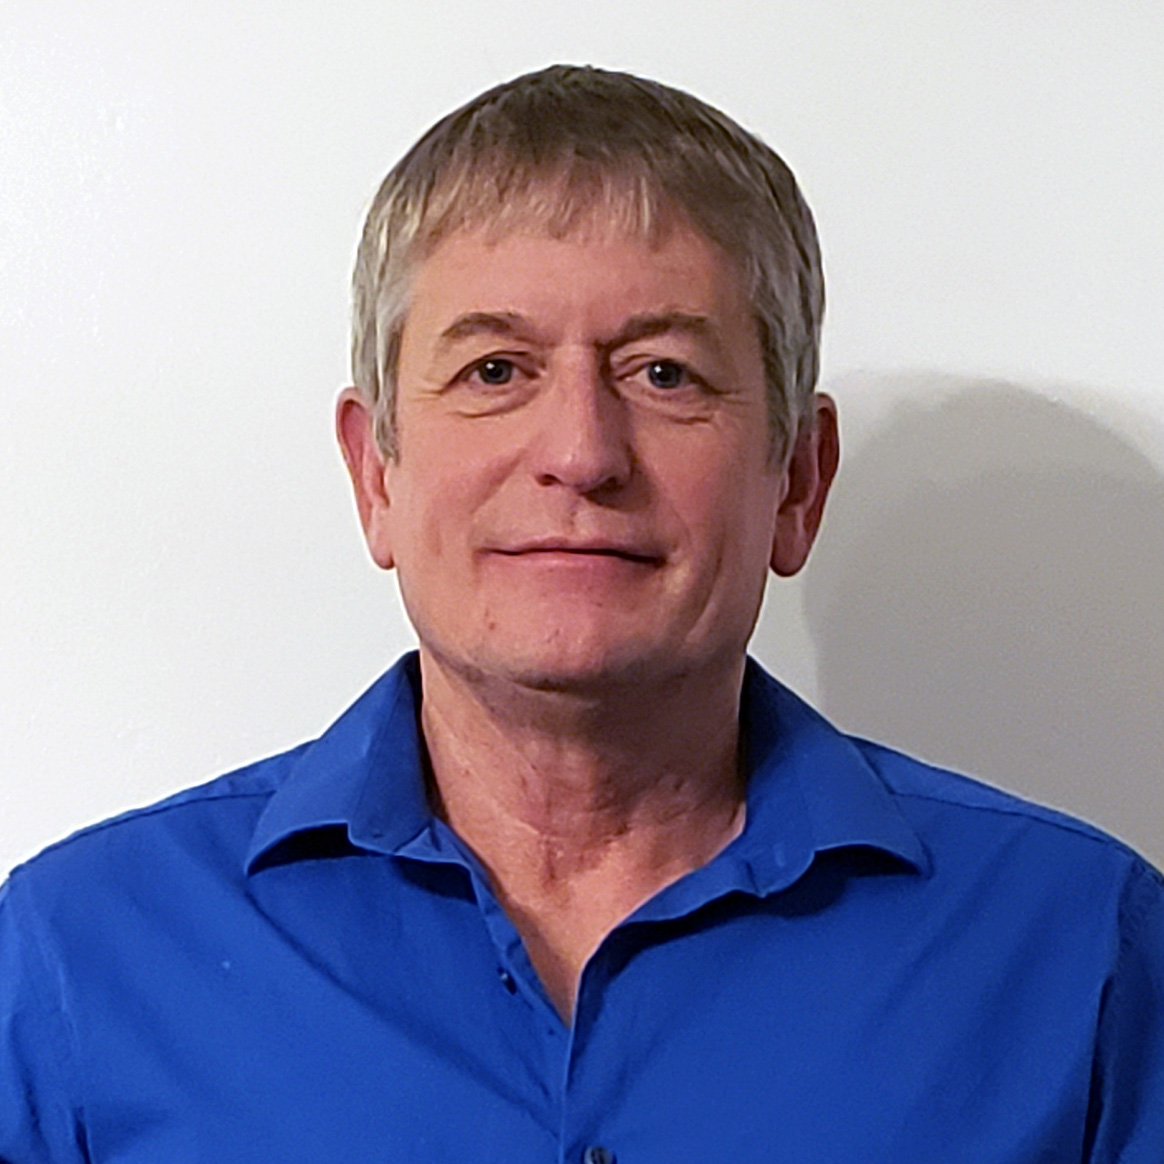 Headshot of Russ Hearn in a blue button down shirt